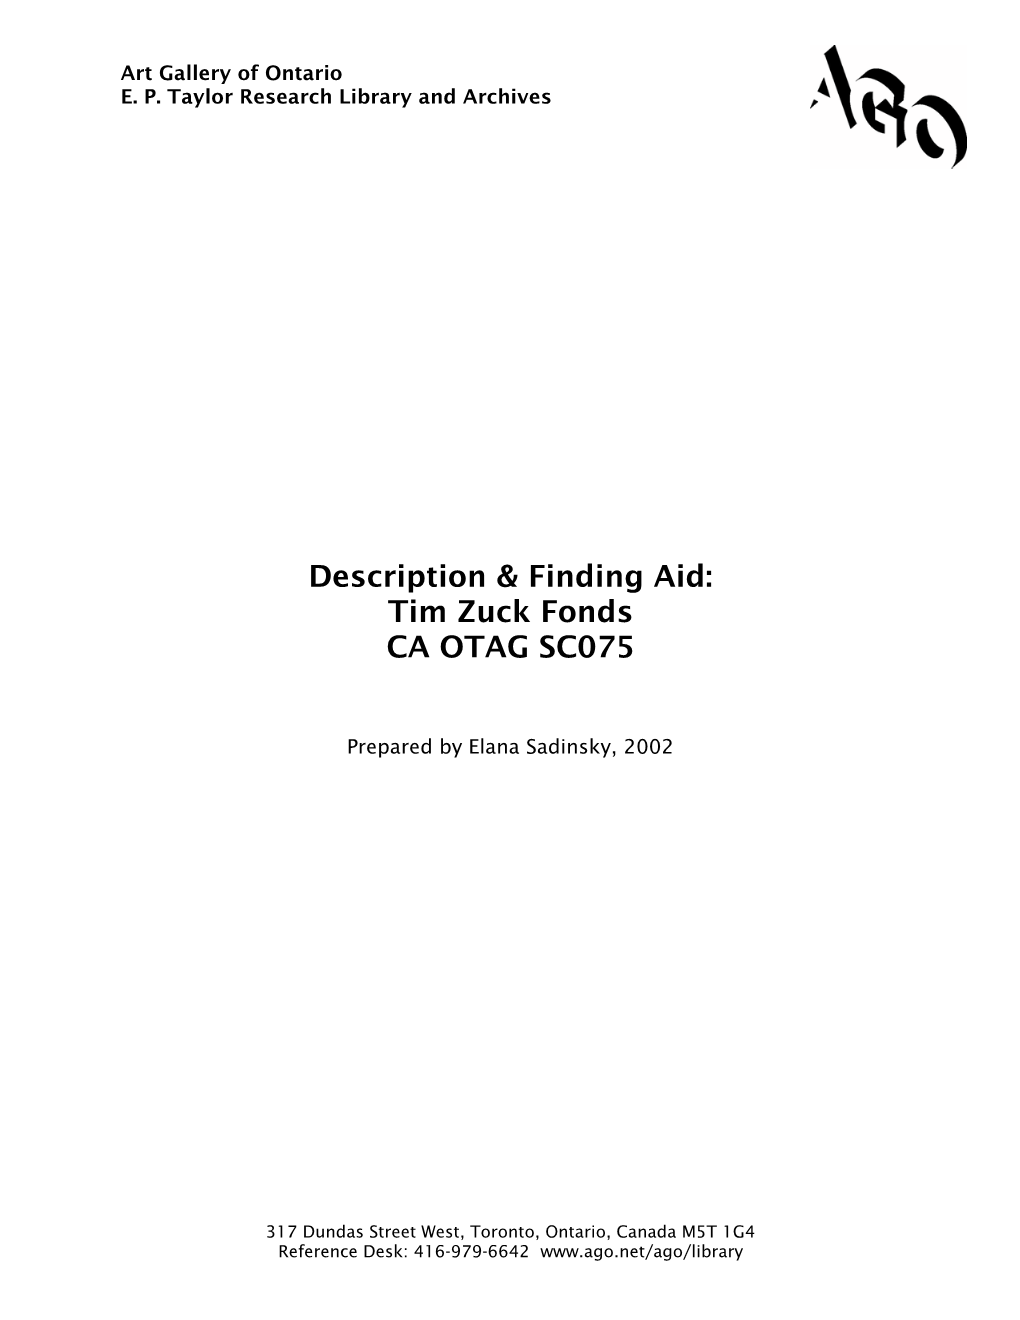 Description & Finding Aid: Tim Zuck Fonds CA OTAG SC075